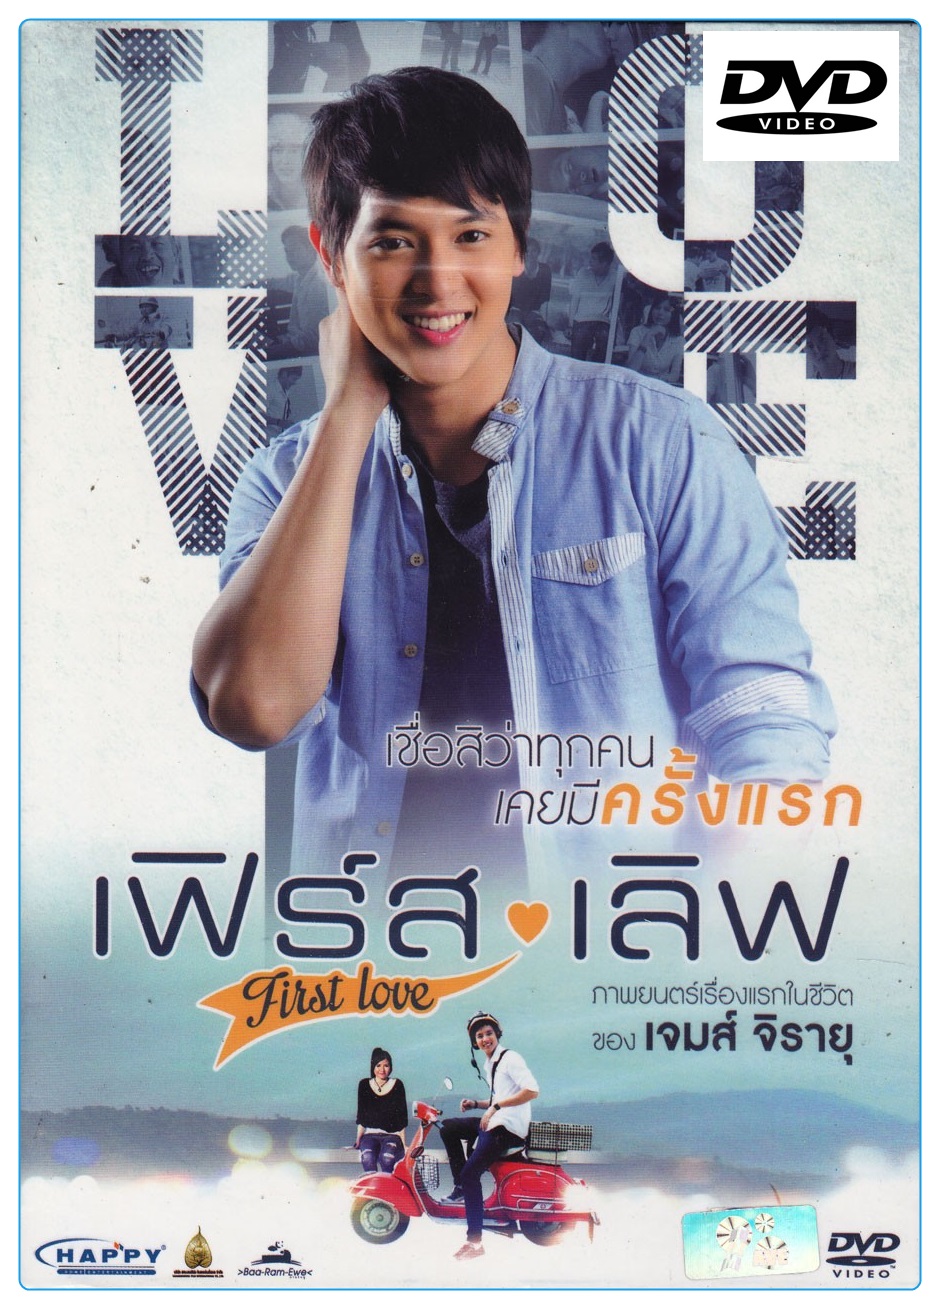 First Love เฟิร์ส เลิฟ (Thai Movie) (DVD)